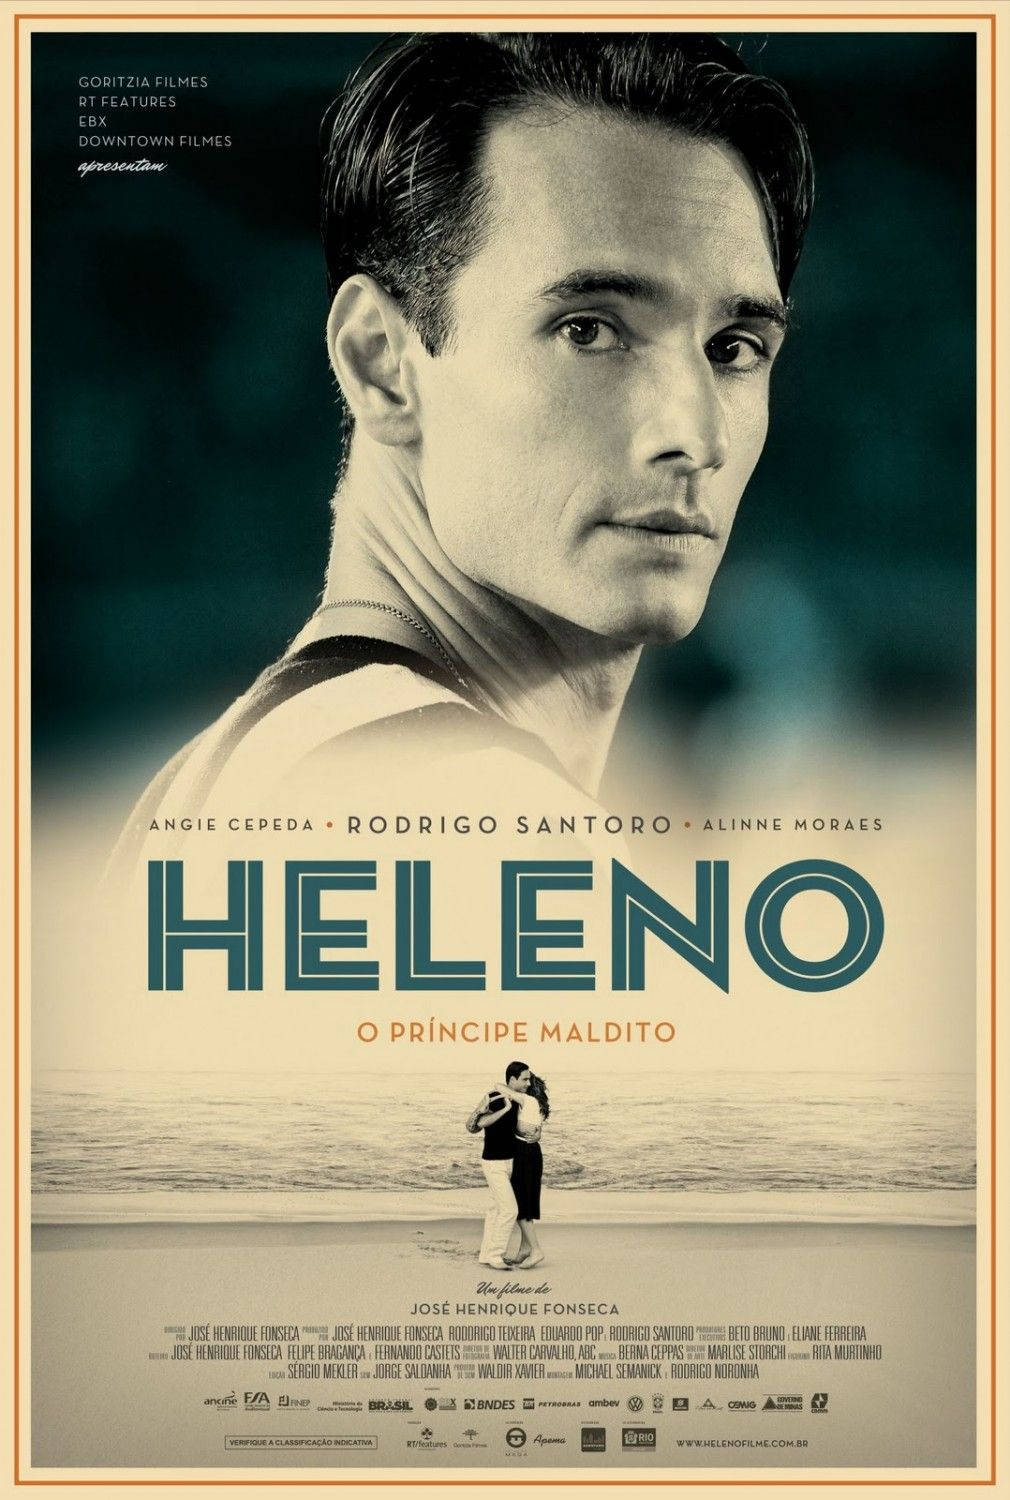 Rodrigosantoro - Heleno Der Film Wallpaper